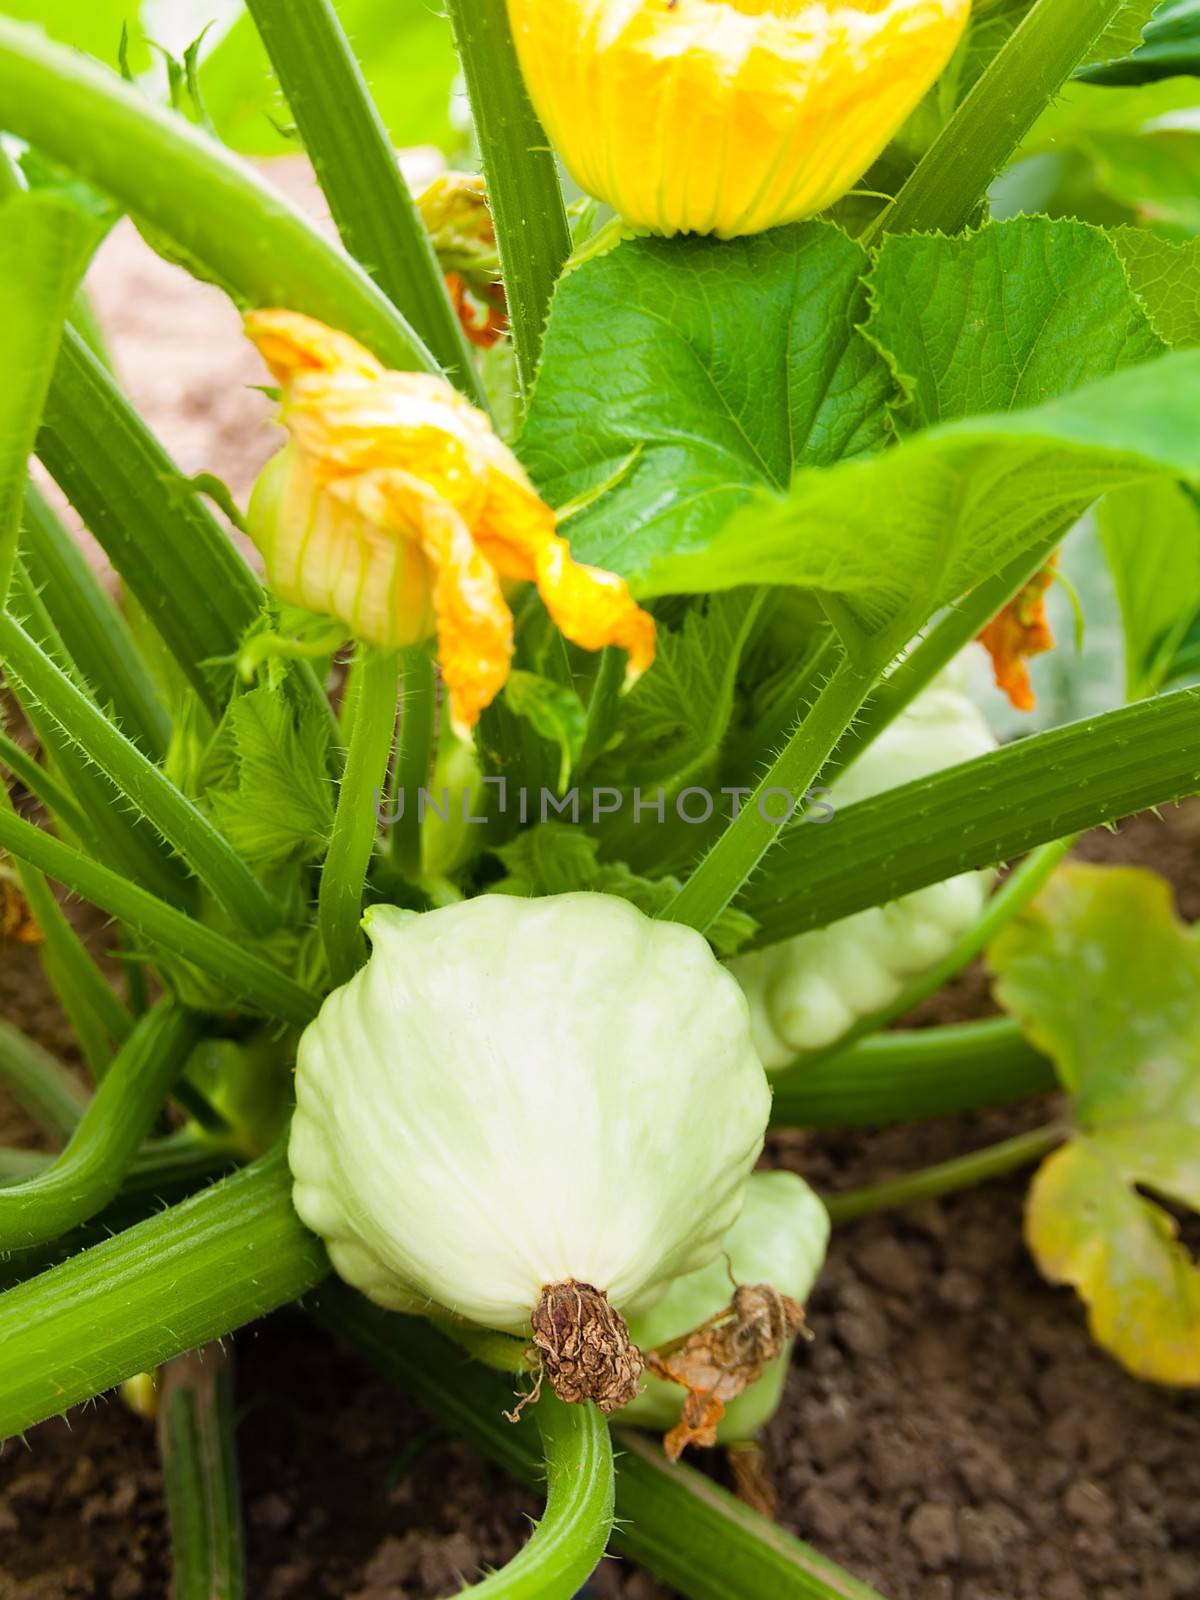 Pattypan squash growing on vegetable bed. Custard marrow - a plant belonging to the genus Cucurbita